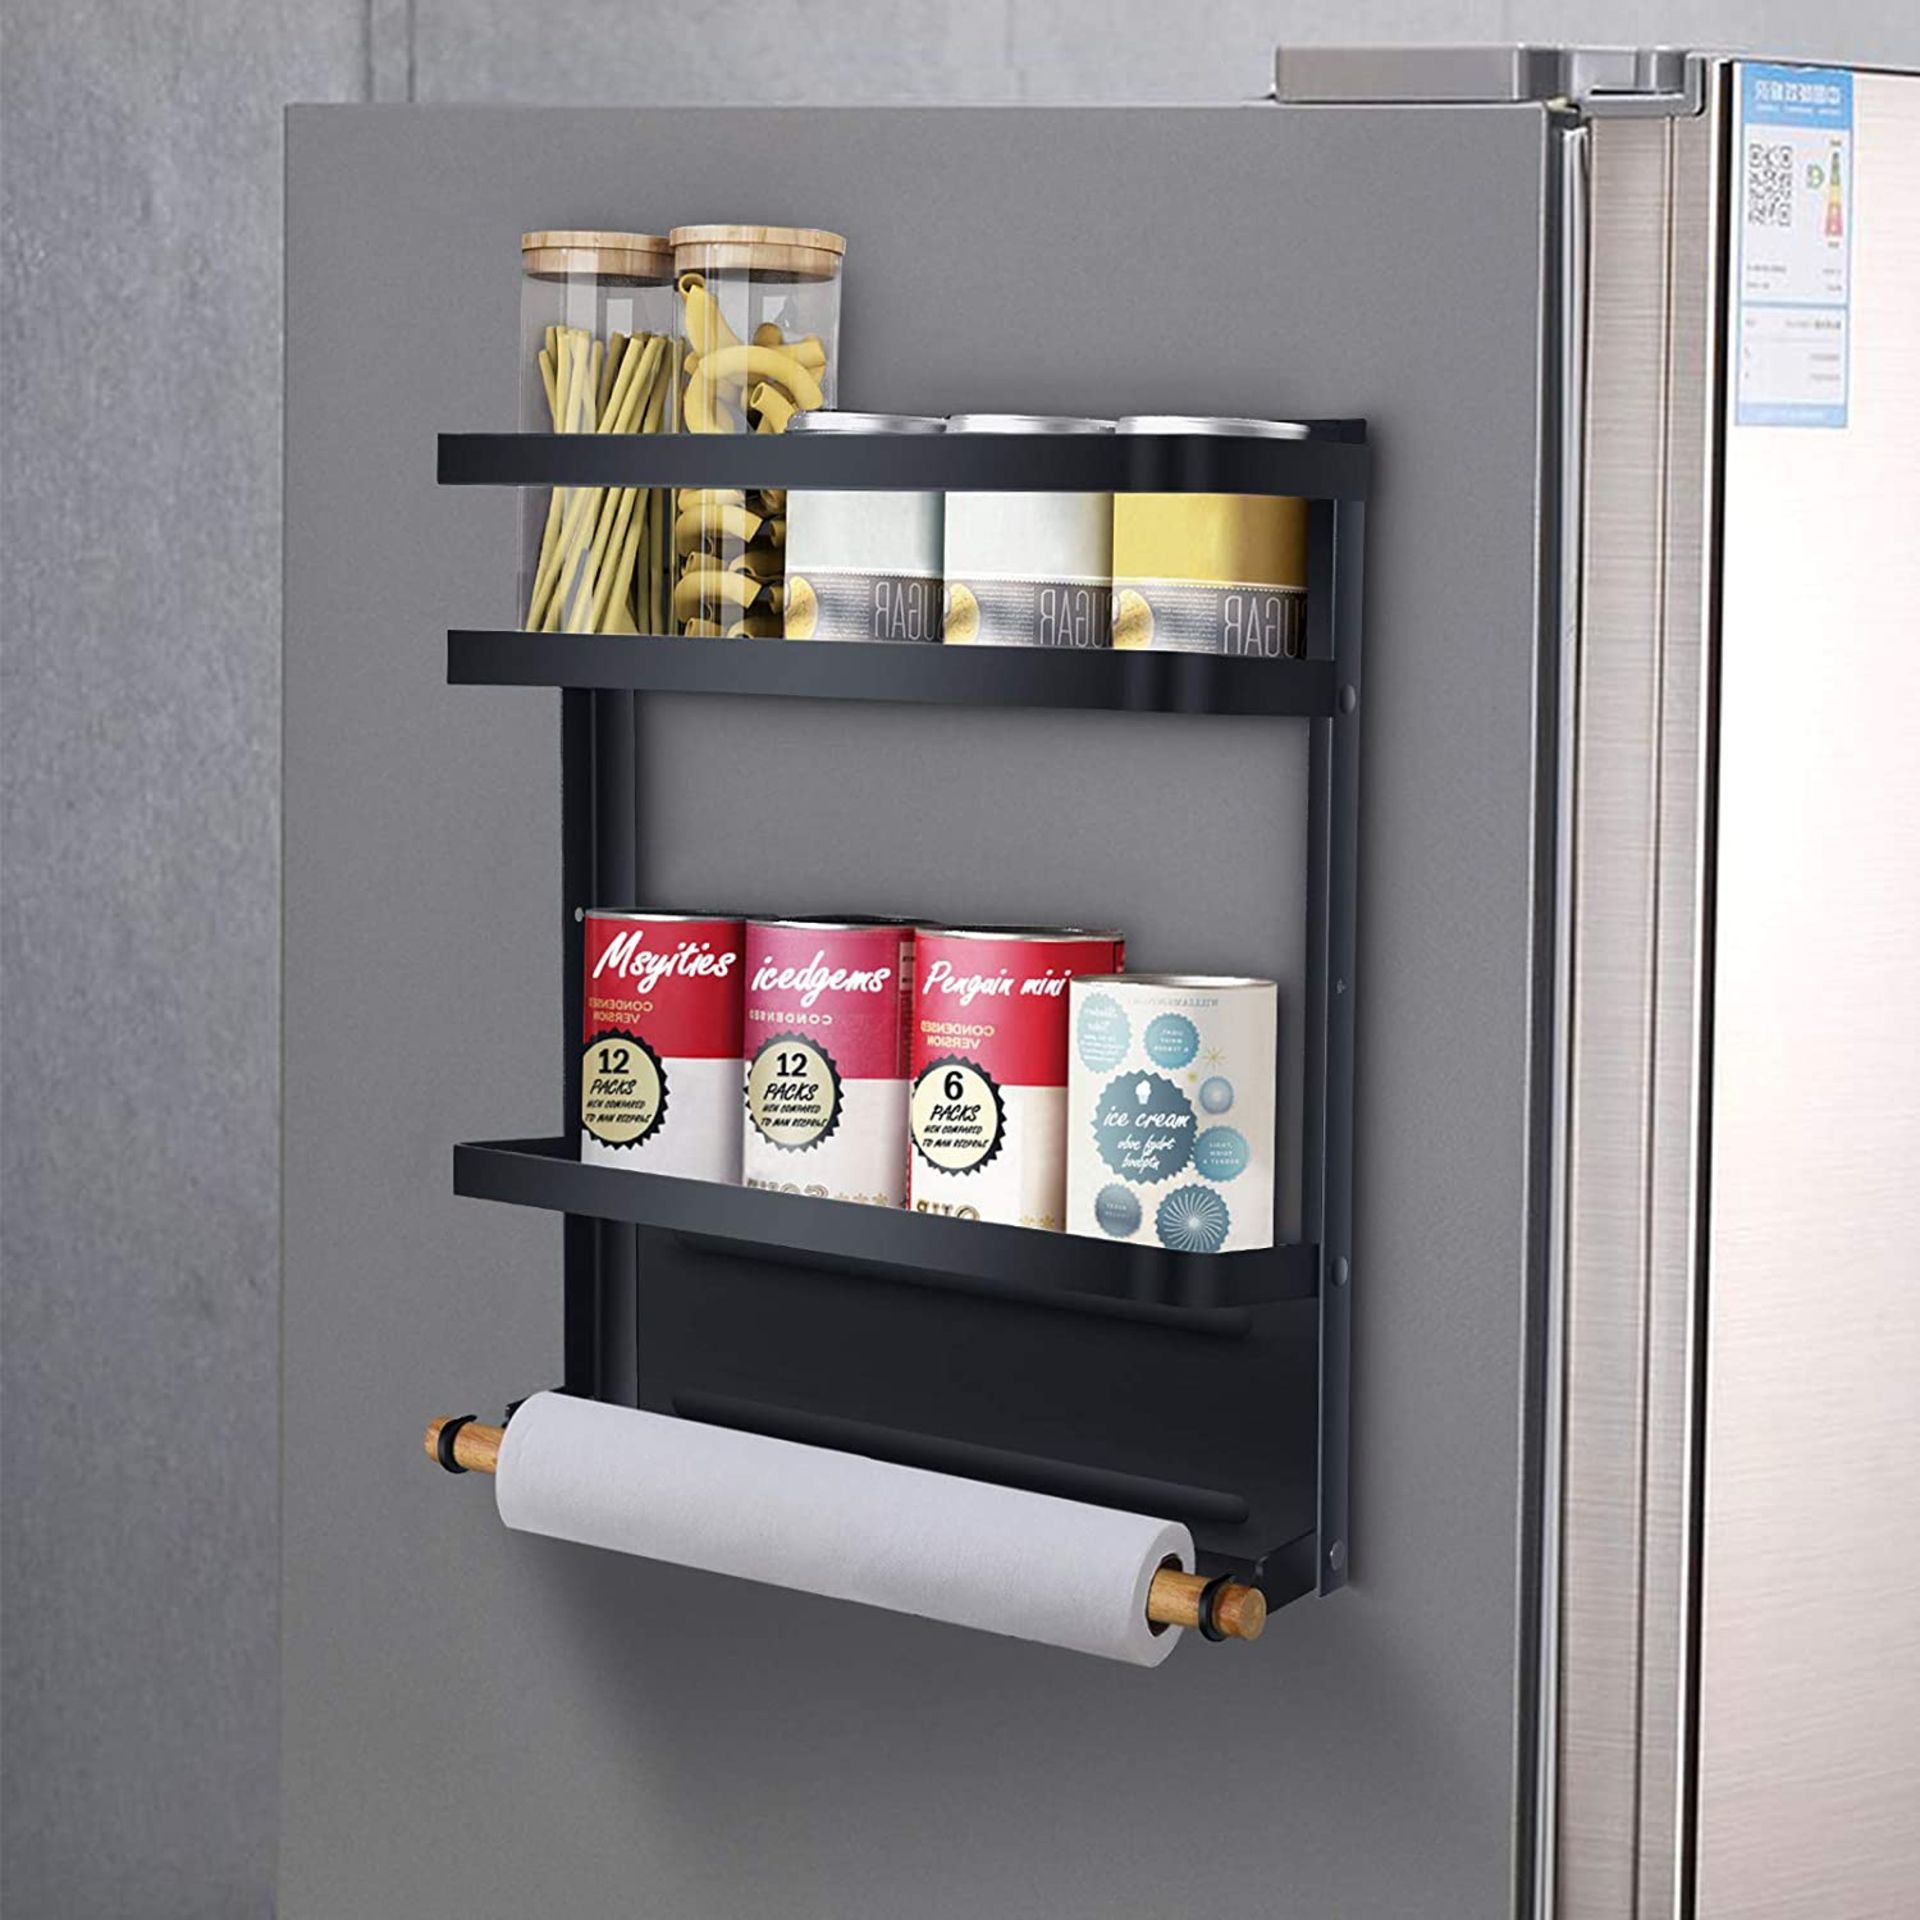 Magnetic Fridge Spice Rack Organiser Rack 2 Tier Refrigerator with Paper Towel Holder RRP 19.99 e...